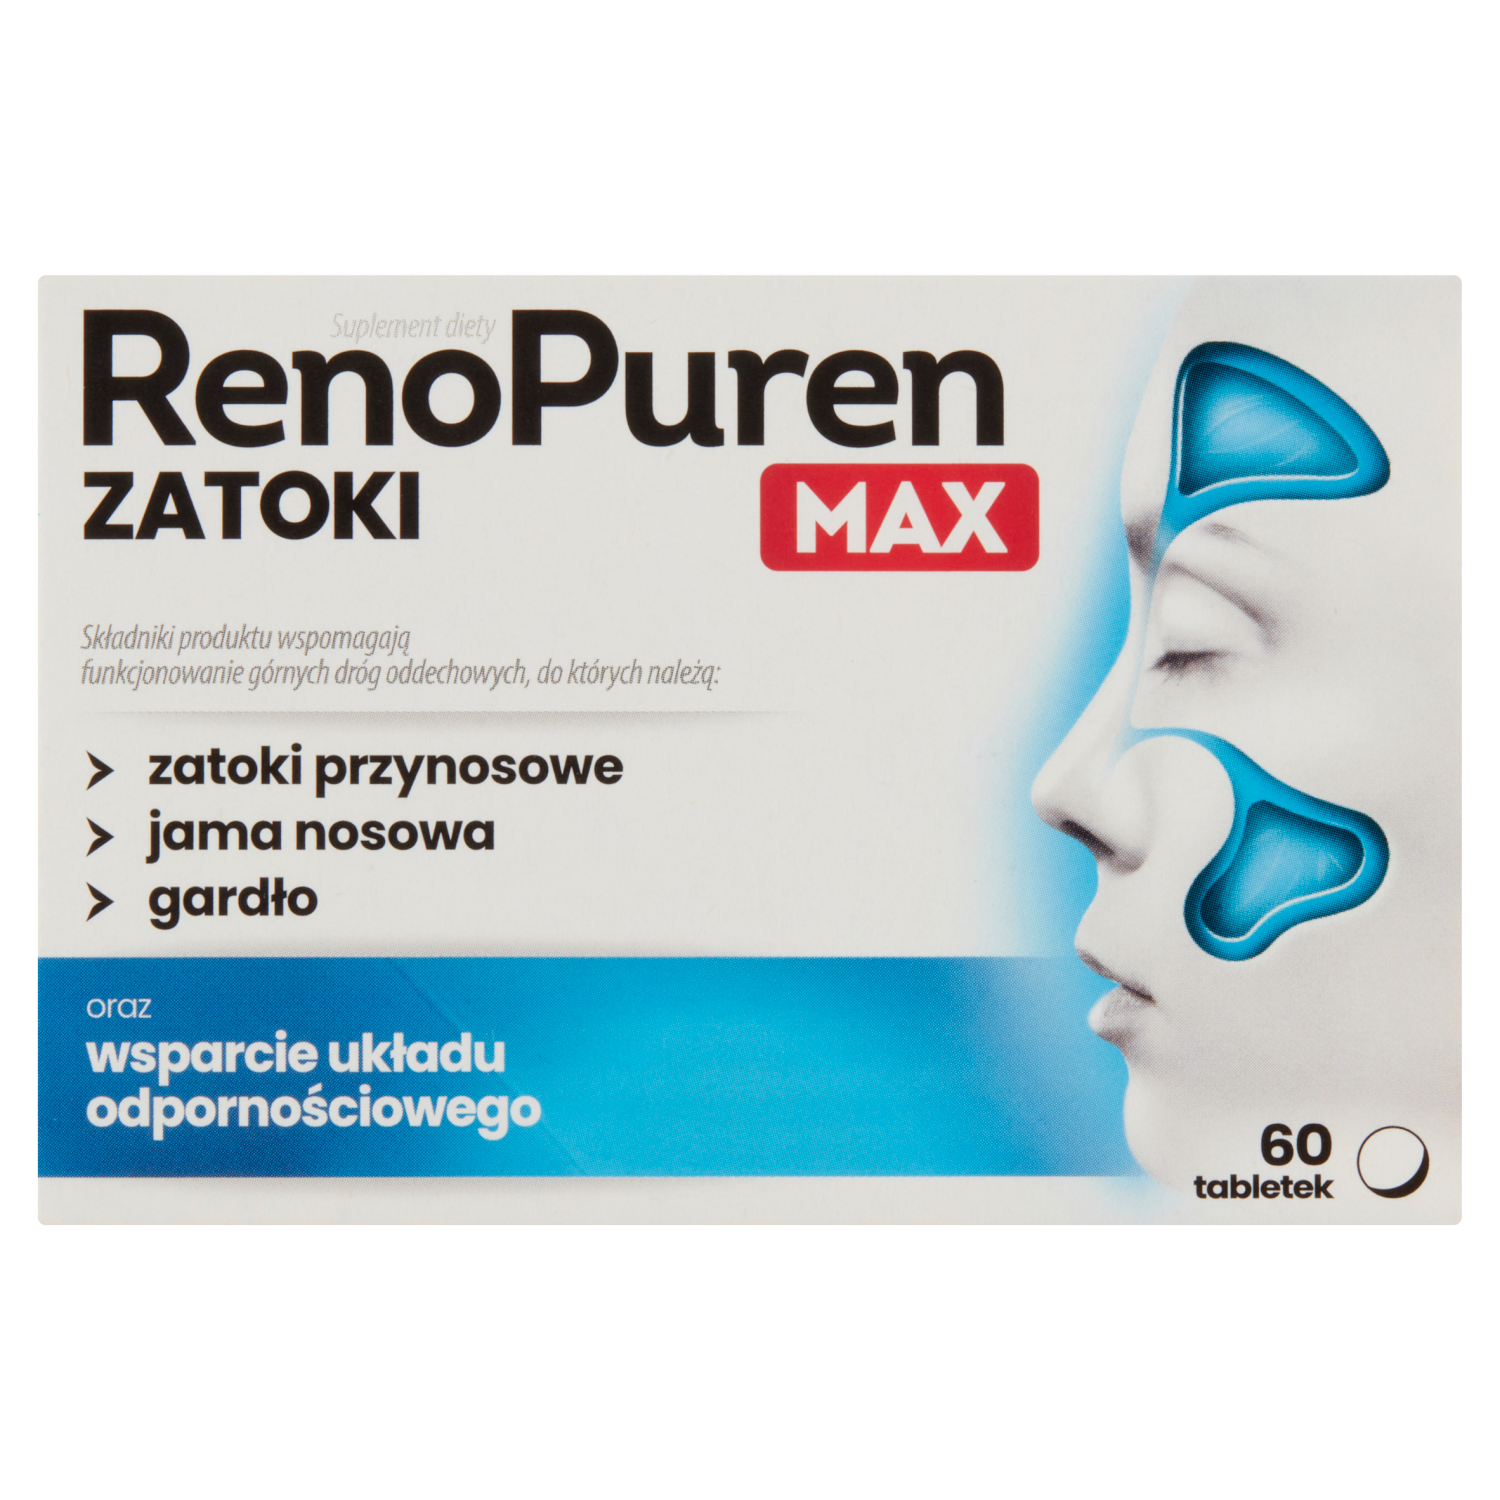 Renopuren Zatoki Max биологически активная добавка, 60 таблеток/1 упаковка linea detox биологически активная добавка 60 таблеток 1 упаковка